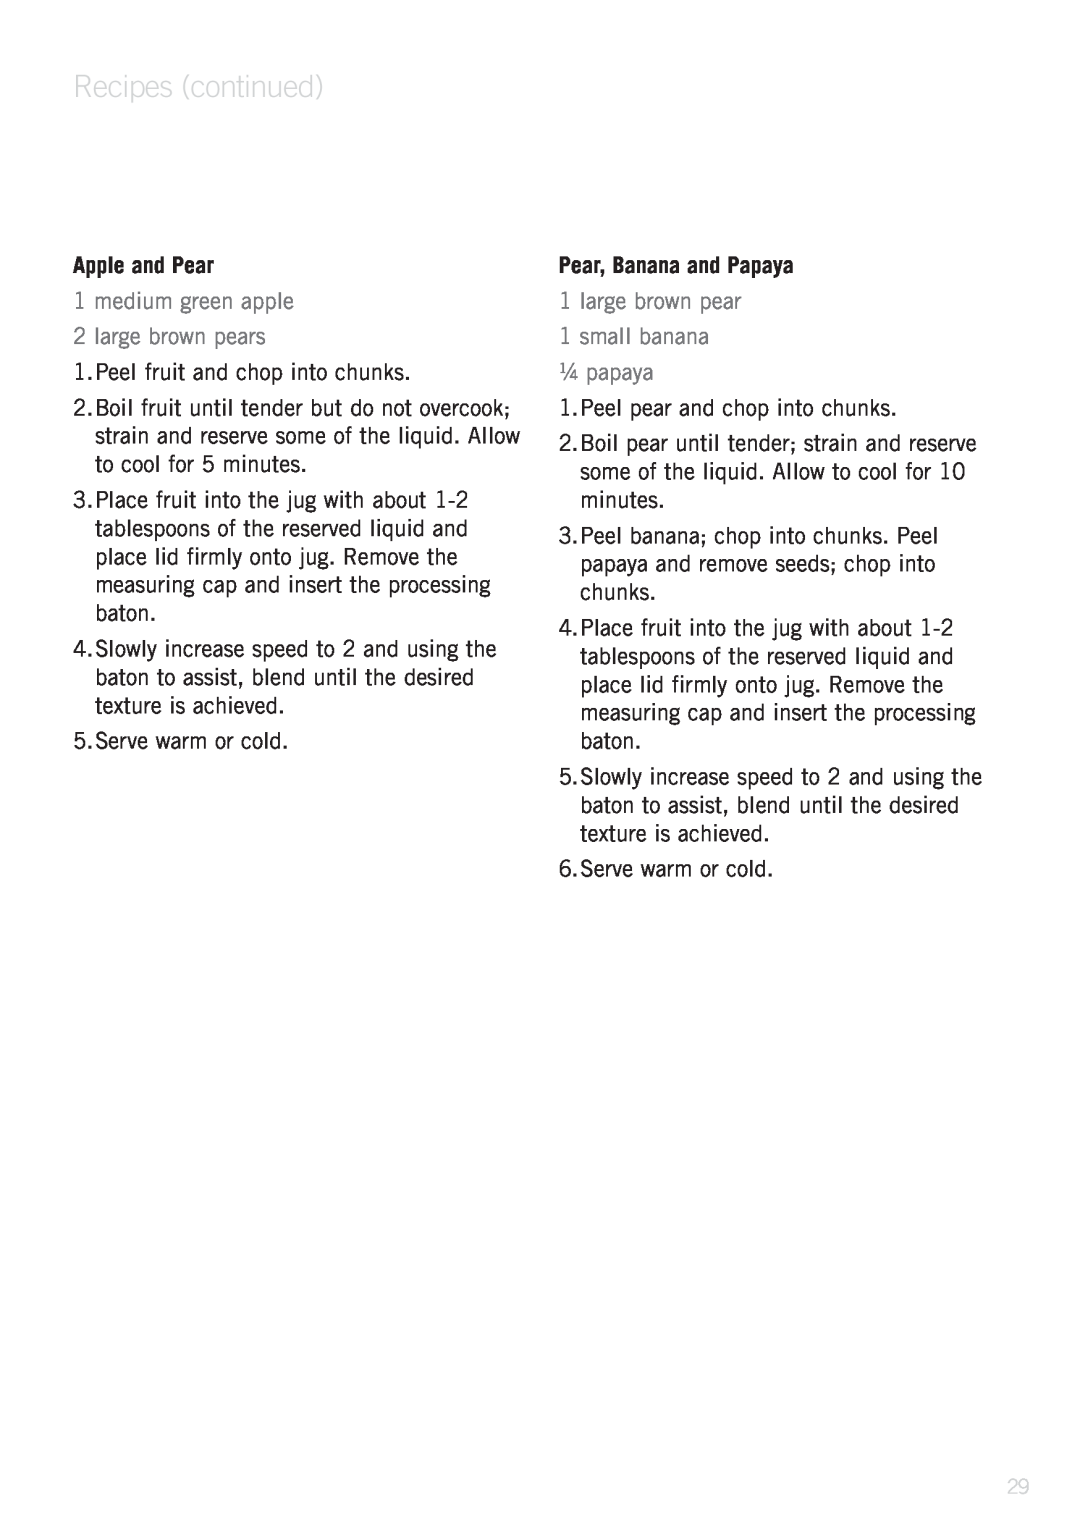 Sunbeam PB9500 manual Apple and Pear, Pear, Banana and Papaya, Recipes continued 